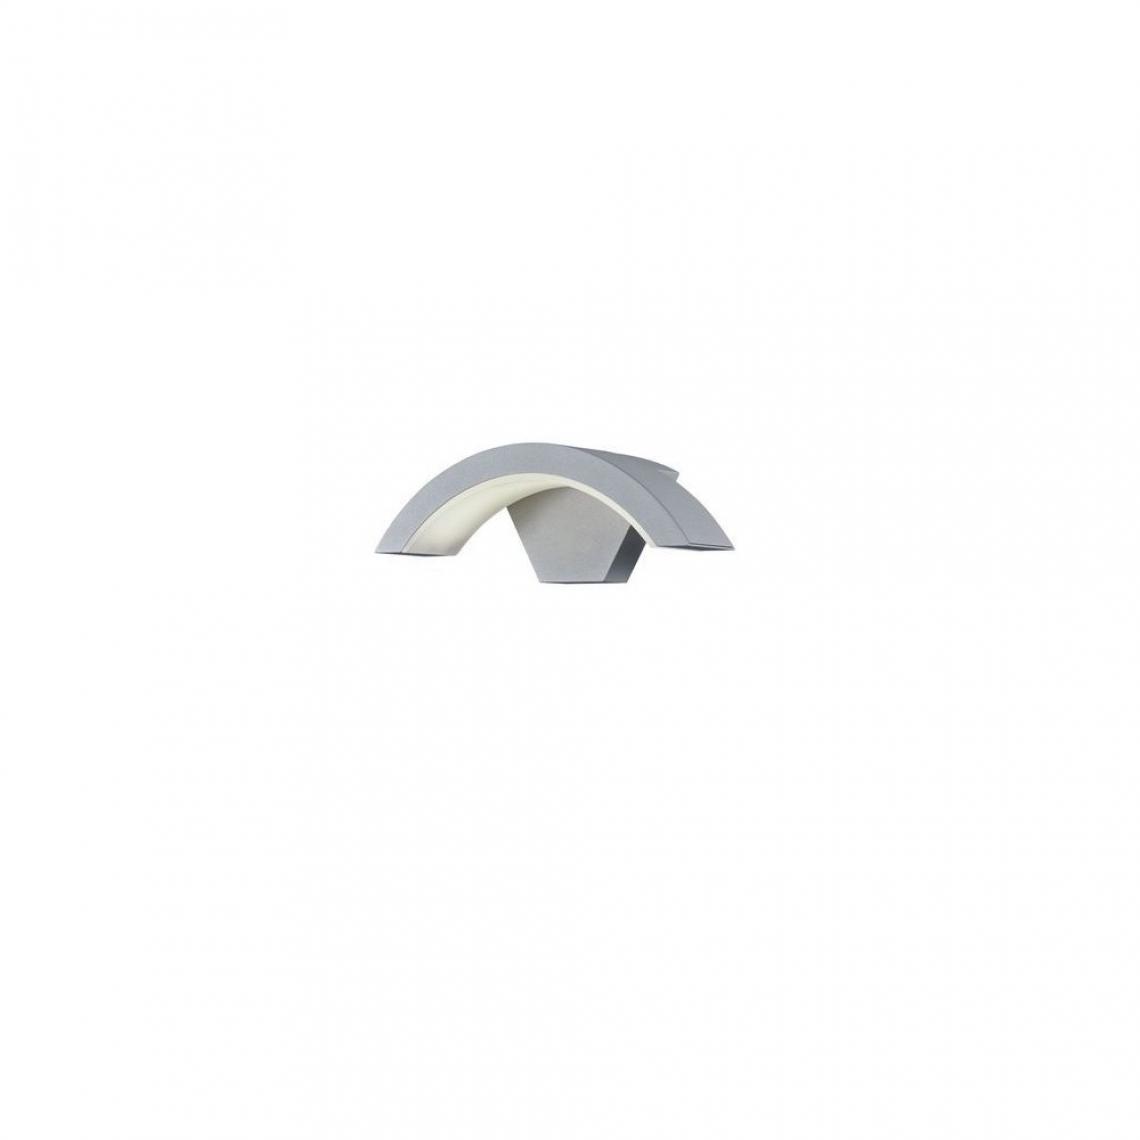 Boutica-Design - Applique Harlem Titane 1x6W SMD LED - Applique, hublot